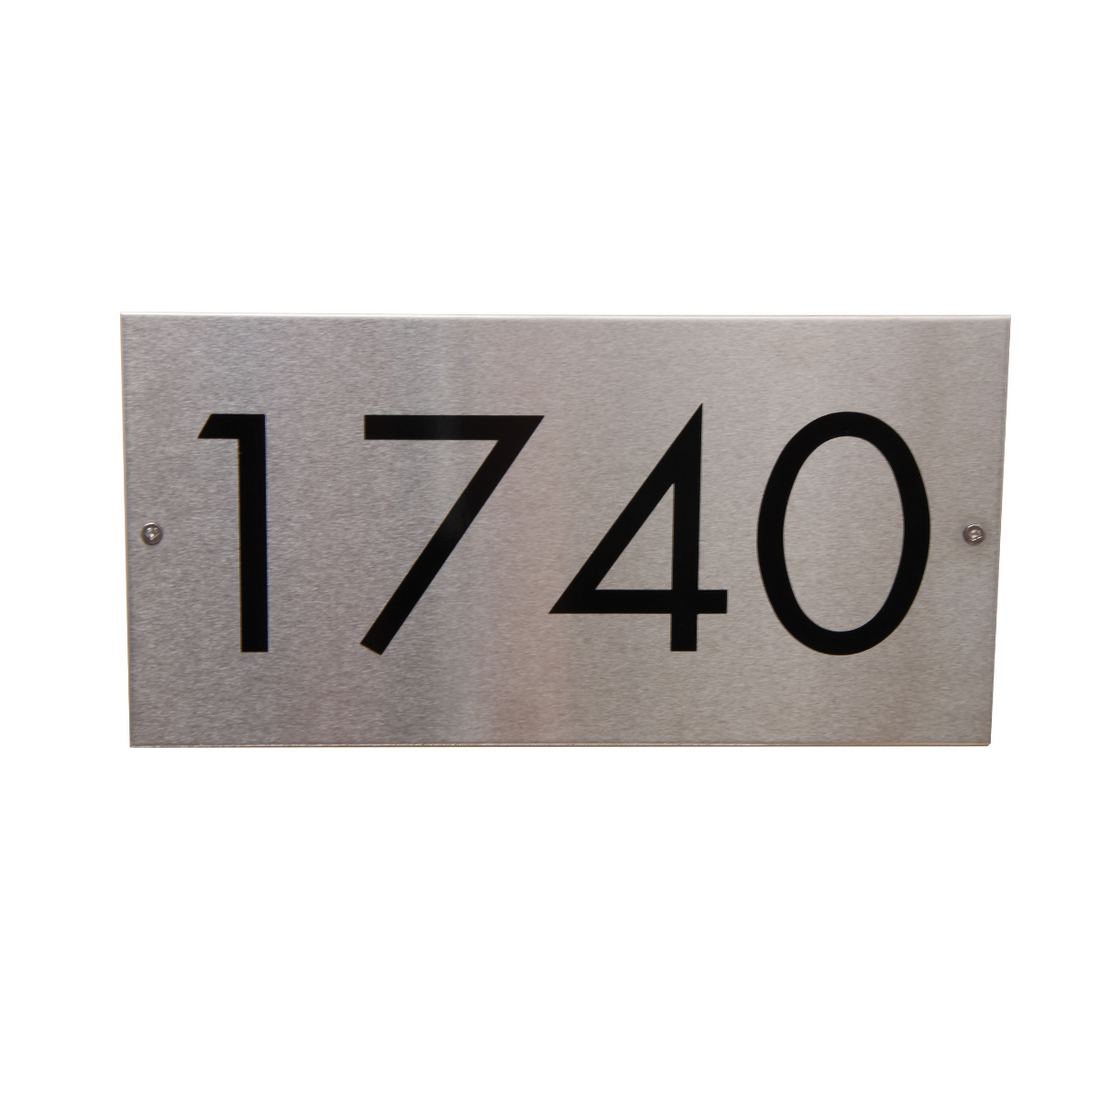 DeVille - Horizontal rectangular stainless steel address plaque - 1740